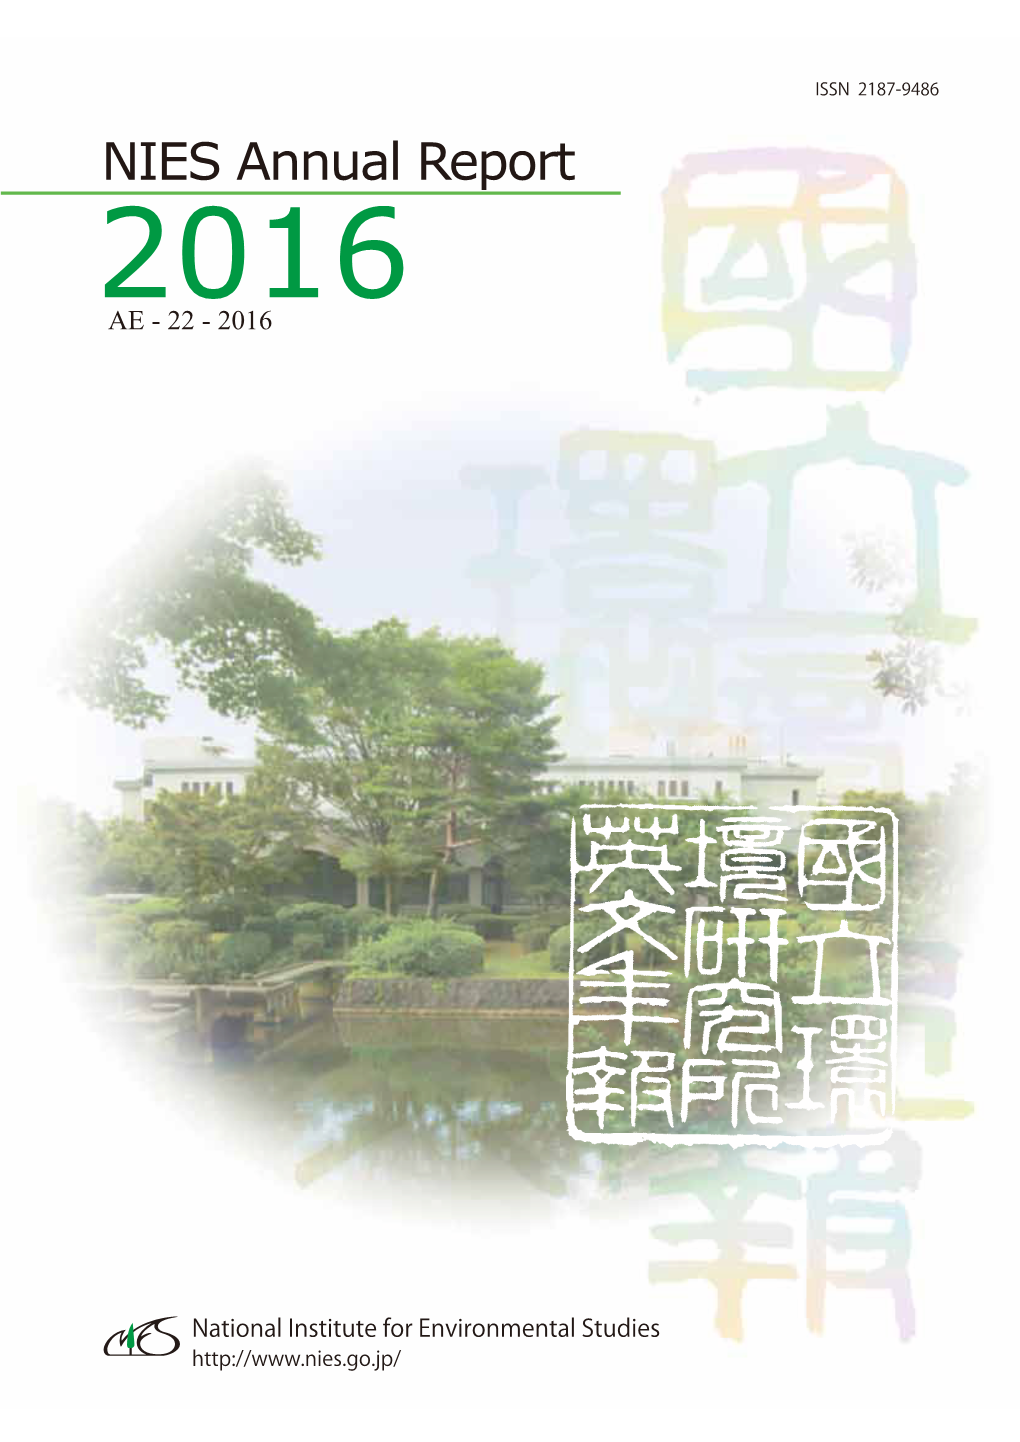 NIES Annual Report 2016 AE - 22 - 2016